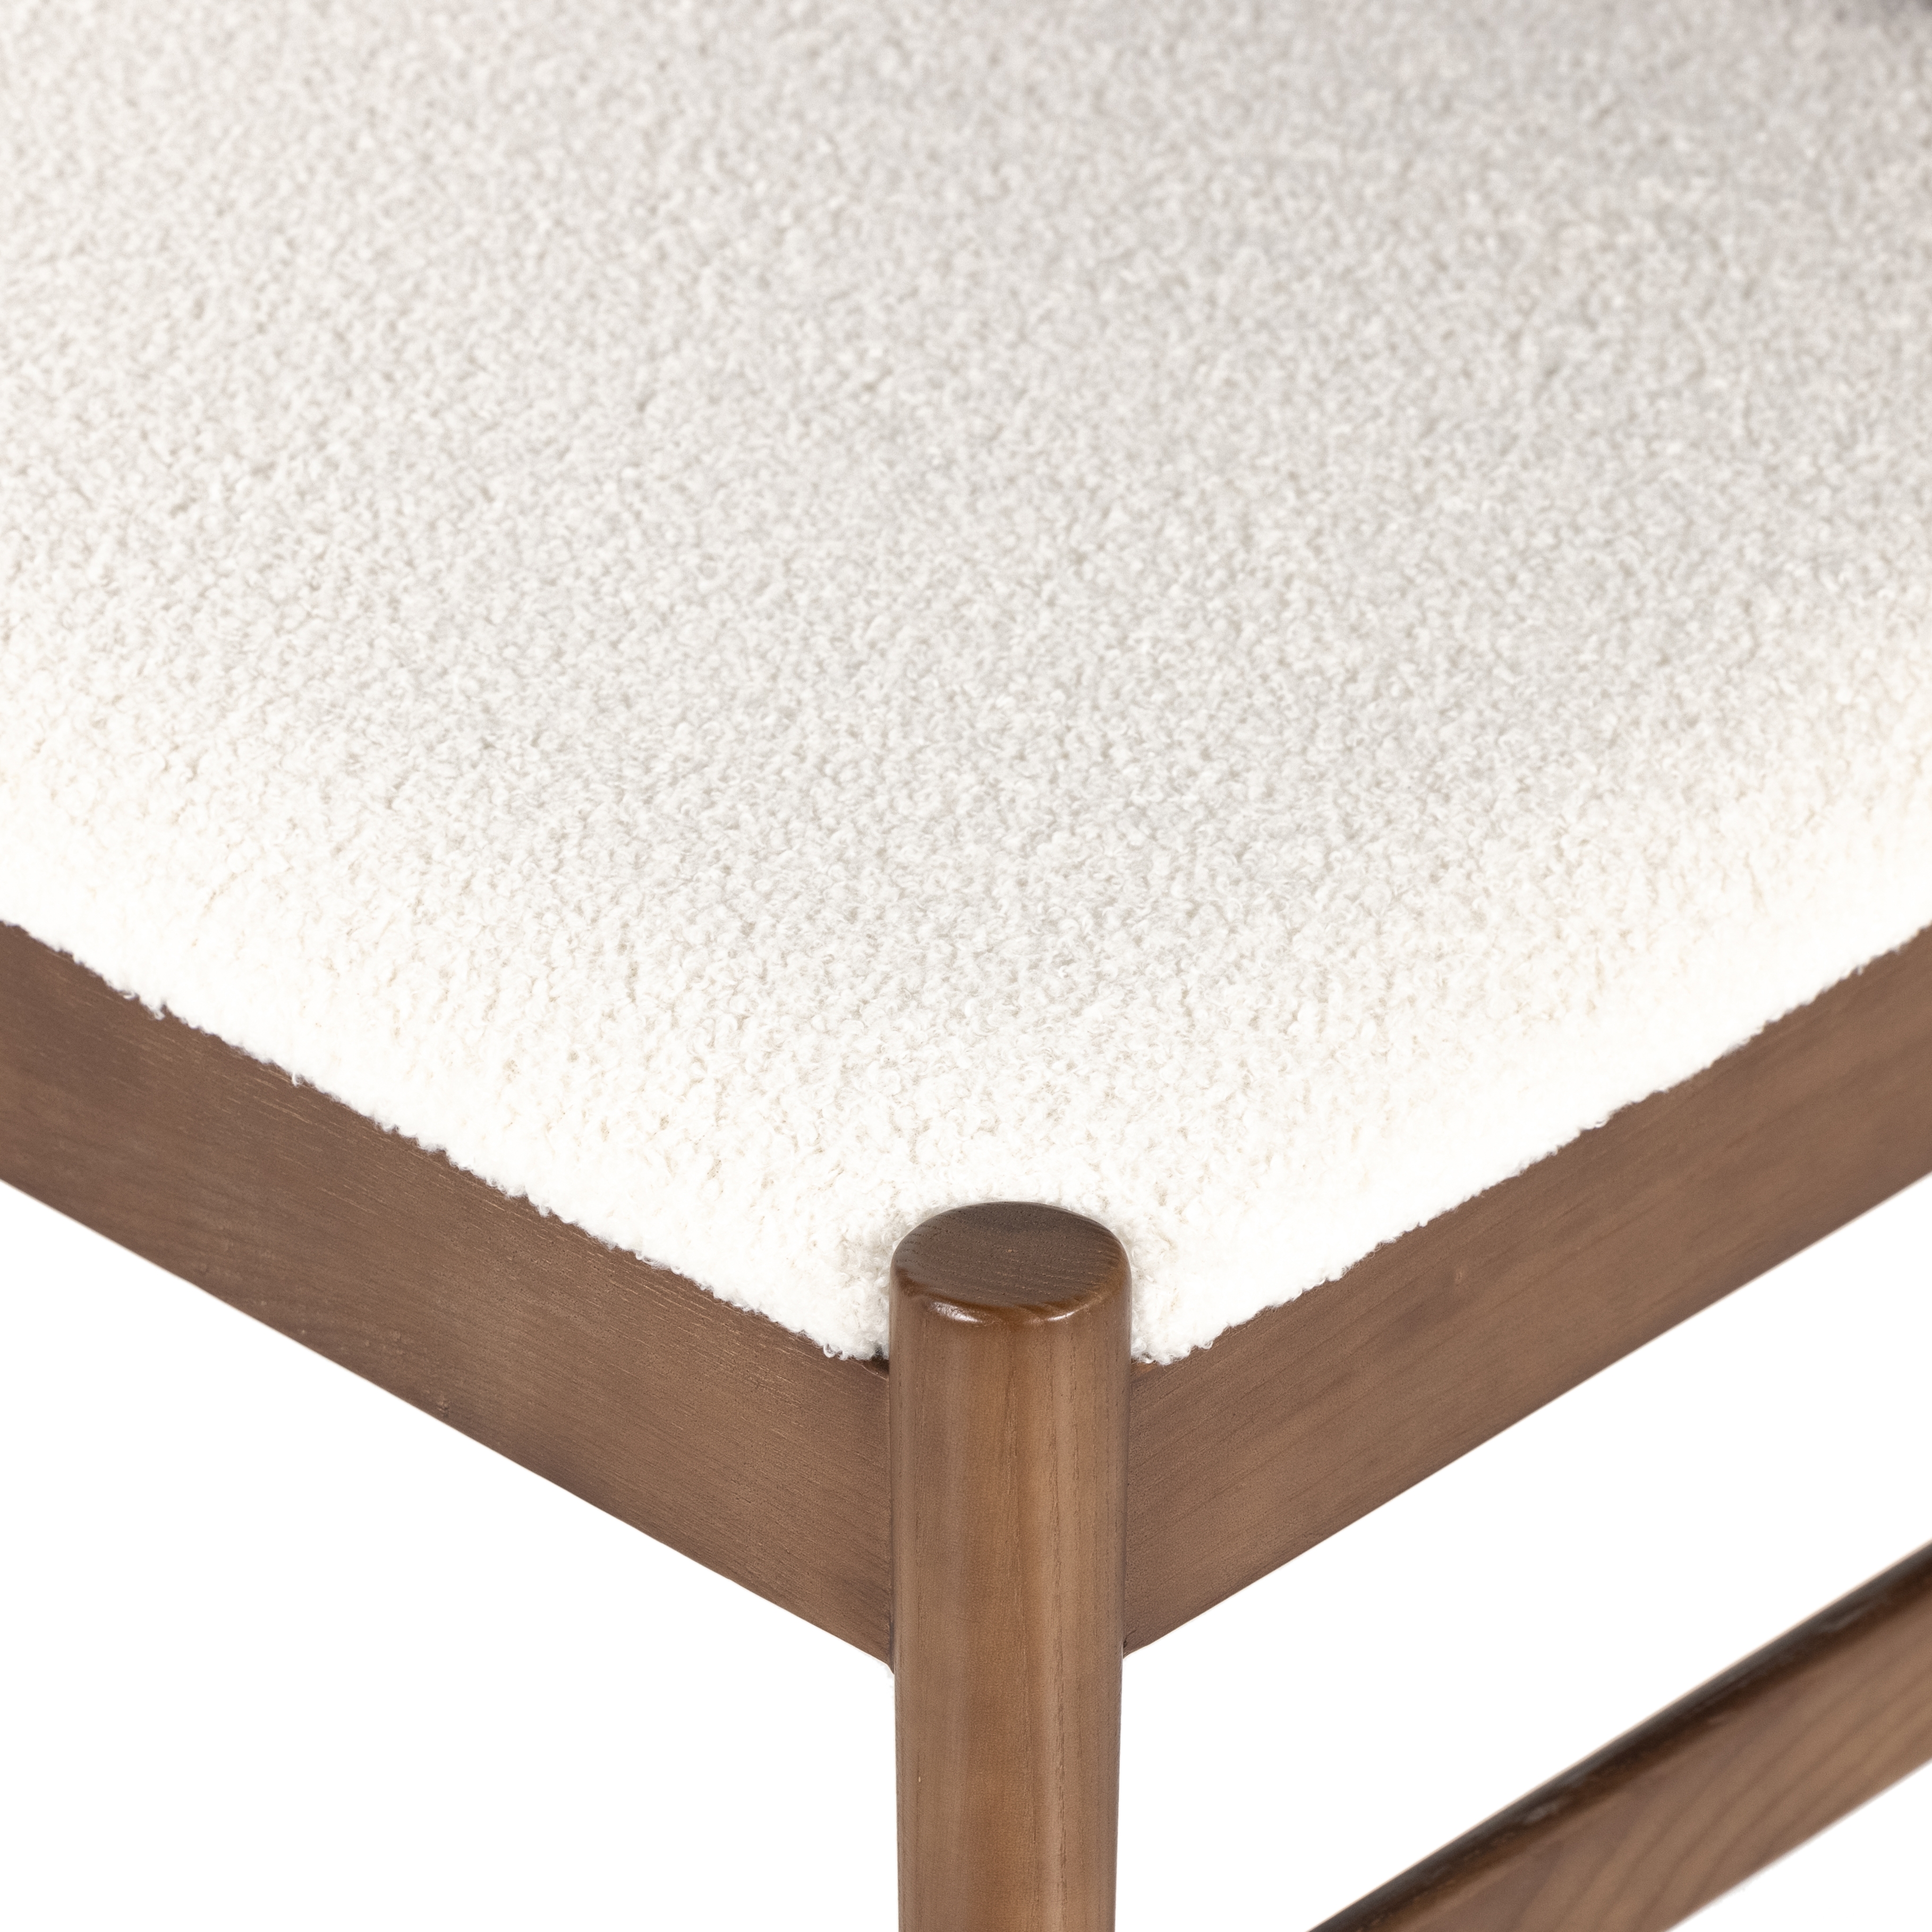 Lulu Armless Dining Chair-Espresso Lthr - Image 9